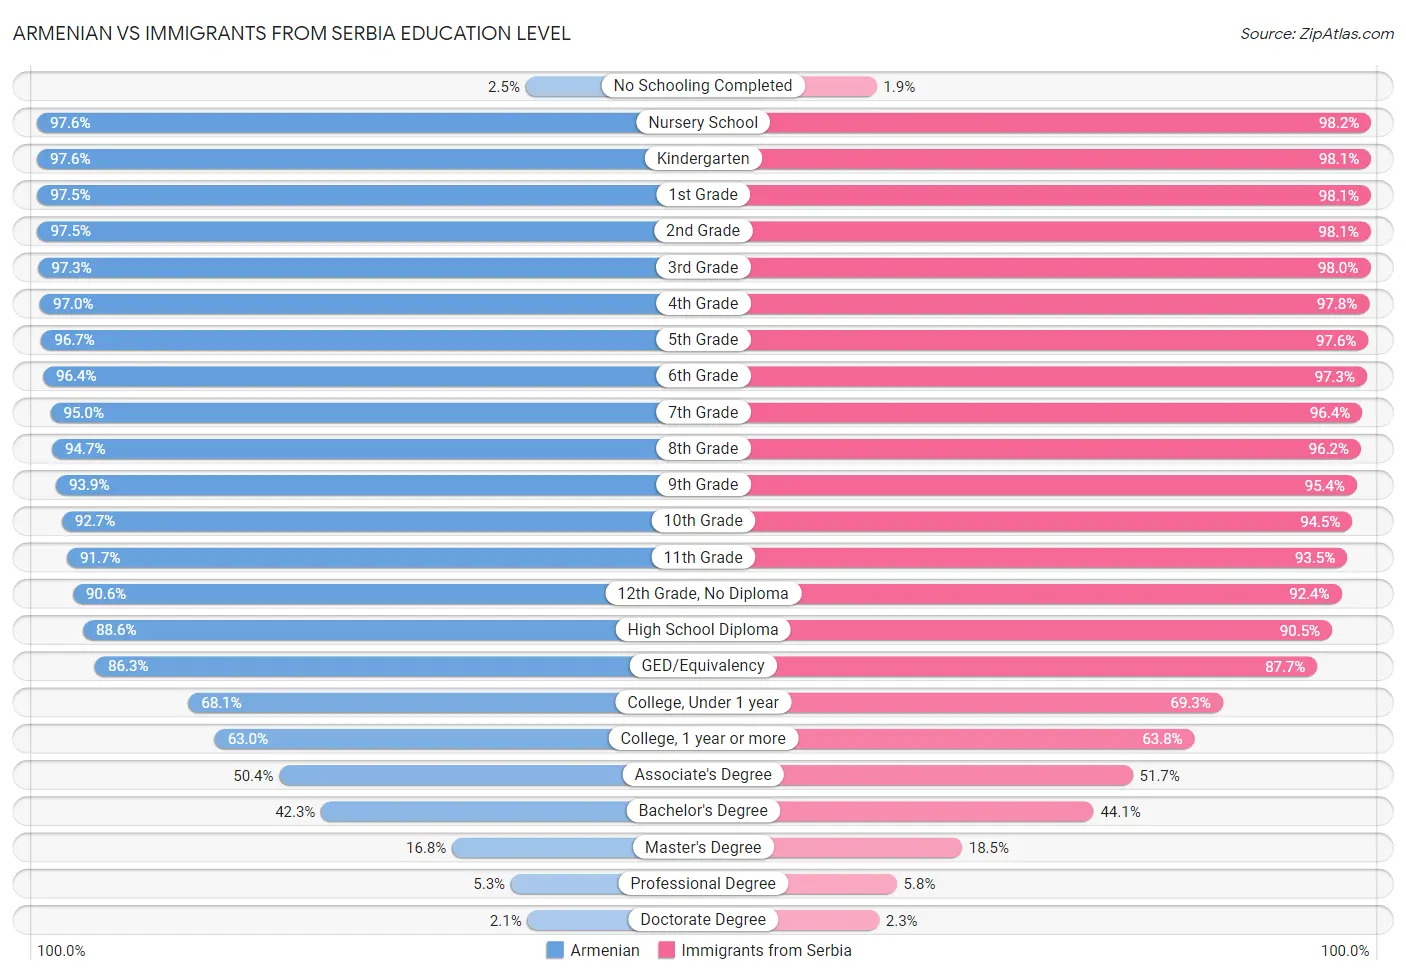 Armenian vs Immigrants from Serbia Education Level